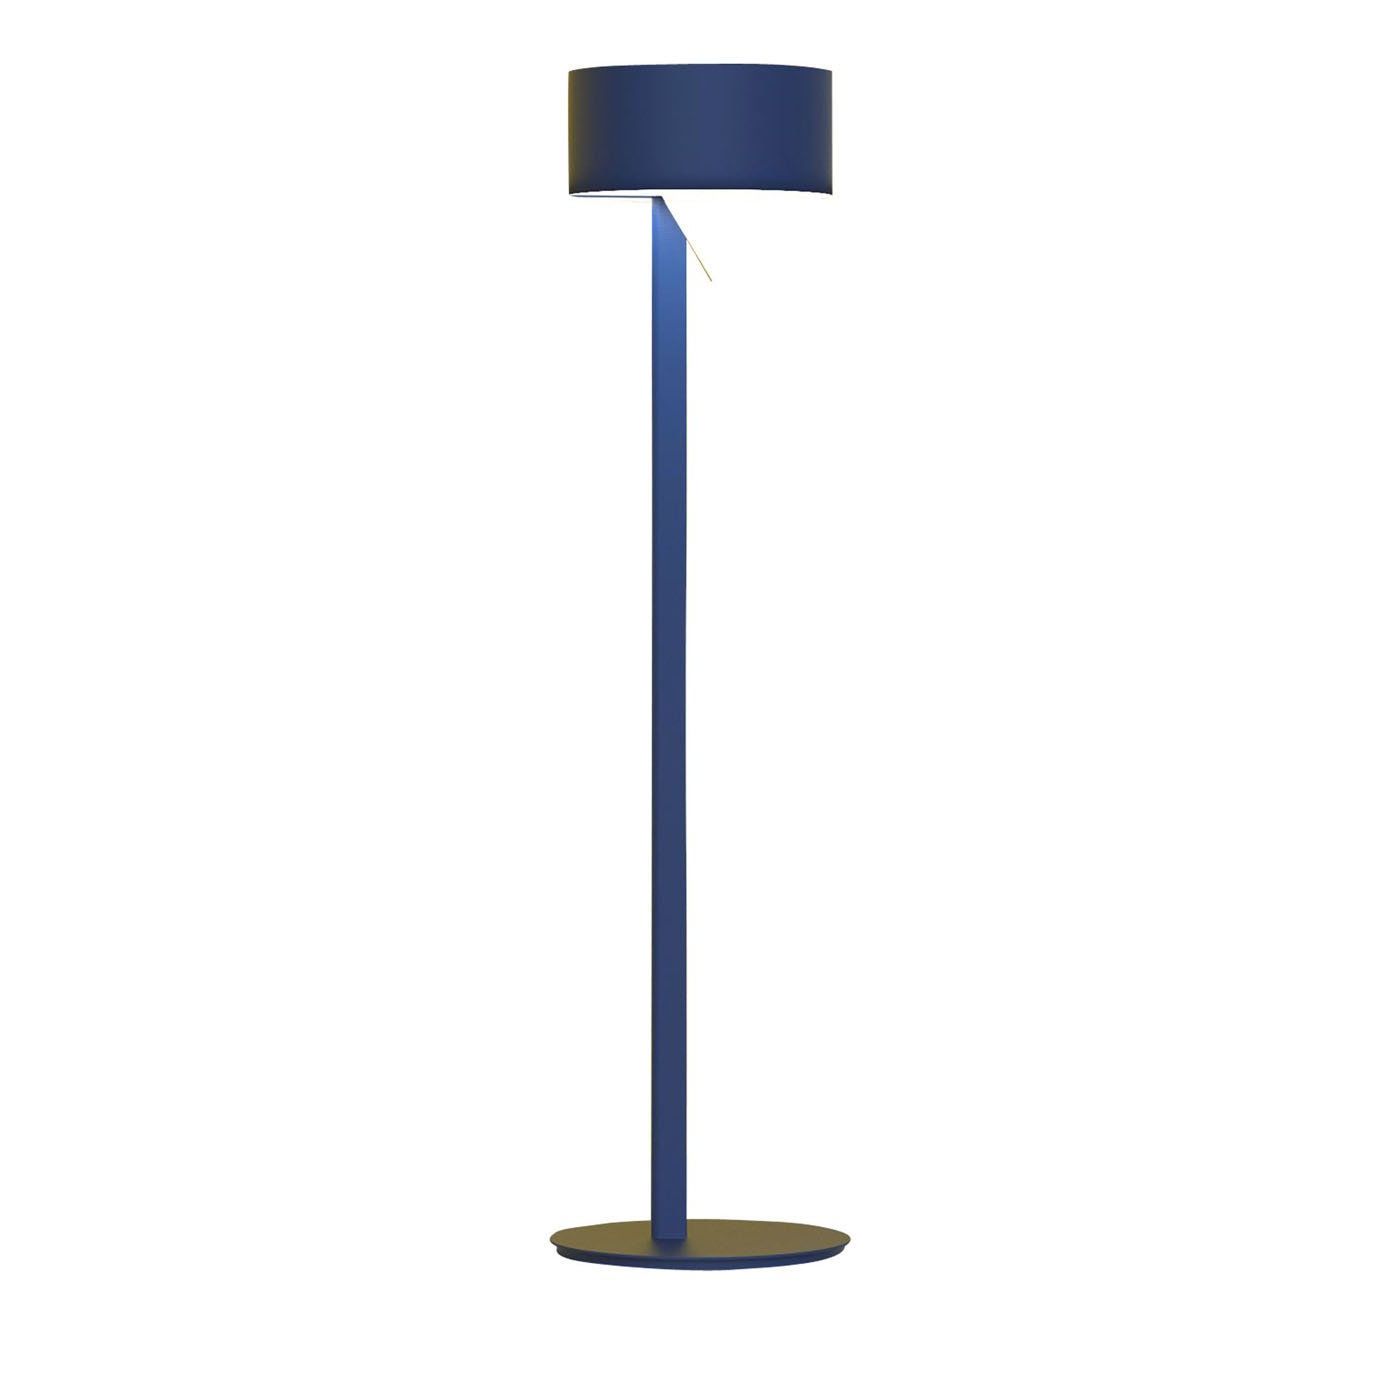 Wa Blue Floor Lampalessandro Zambelli | Blue Floor Lamps, Floor Lamp,  Lamp Inside Blue Floor Lamps (View 7 of 20)